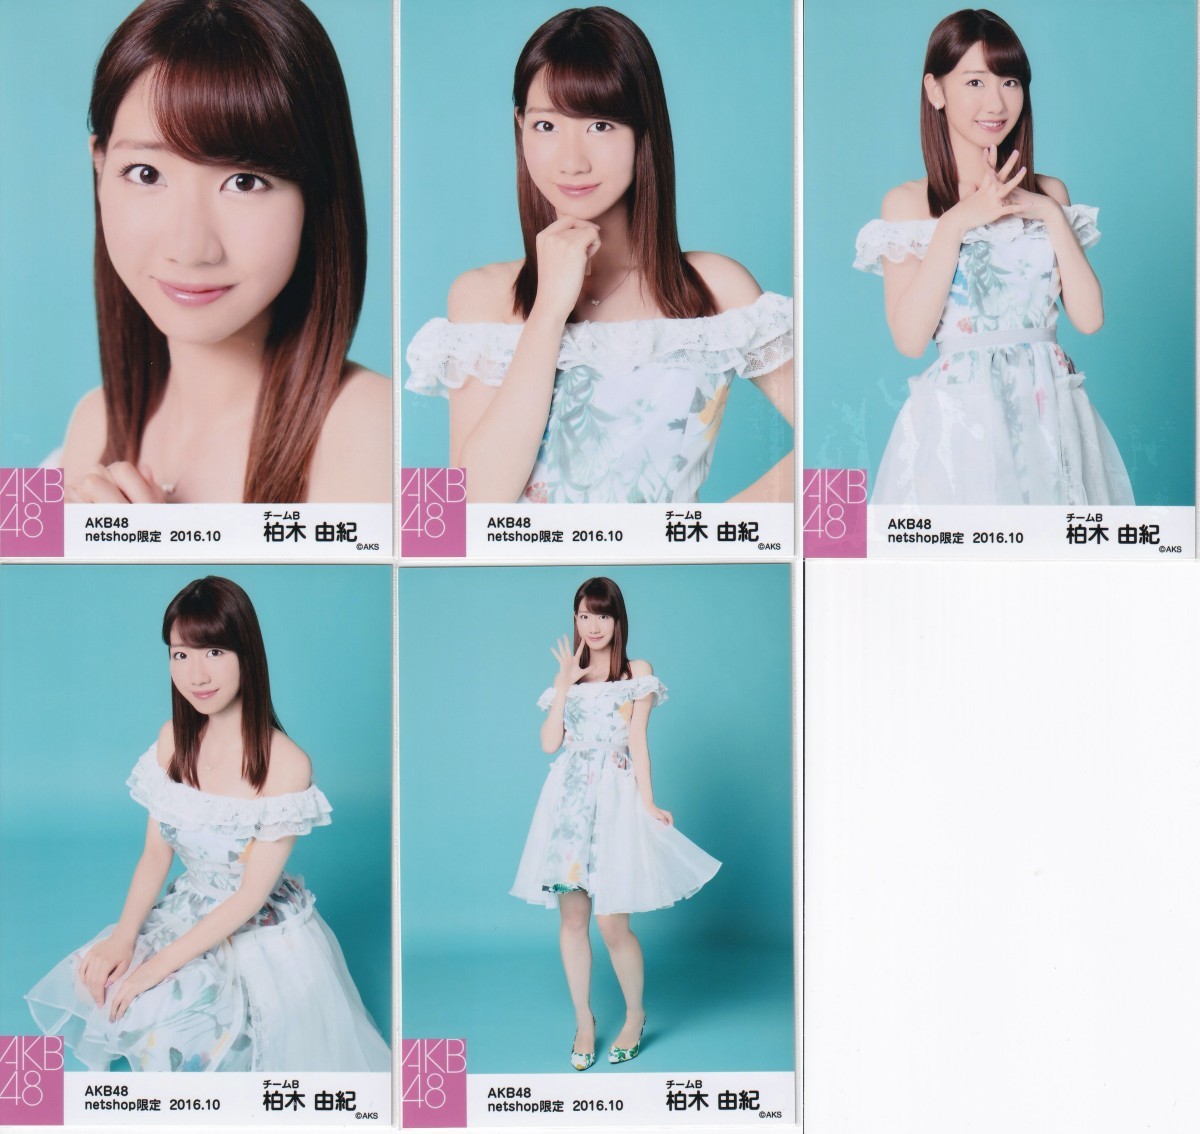 AKB48 Yuki Kashiwagi Netshop Limited 2016.10 аналогичные необработанные фотографии 5 Тип Comp Botanical Costumes